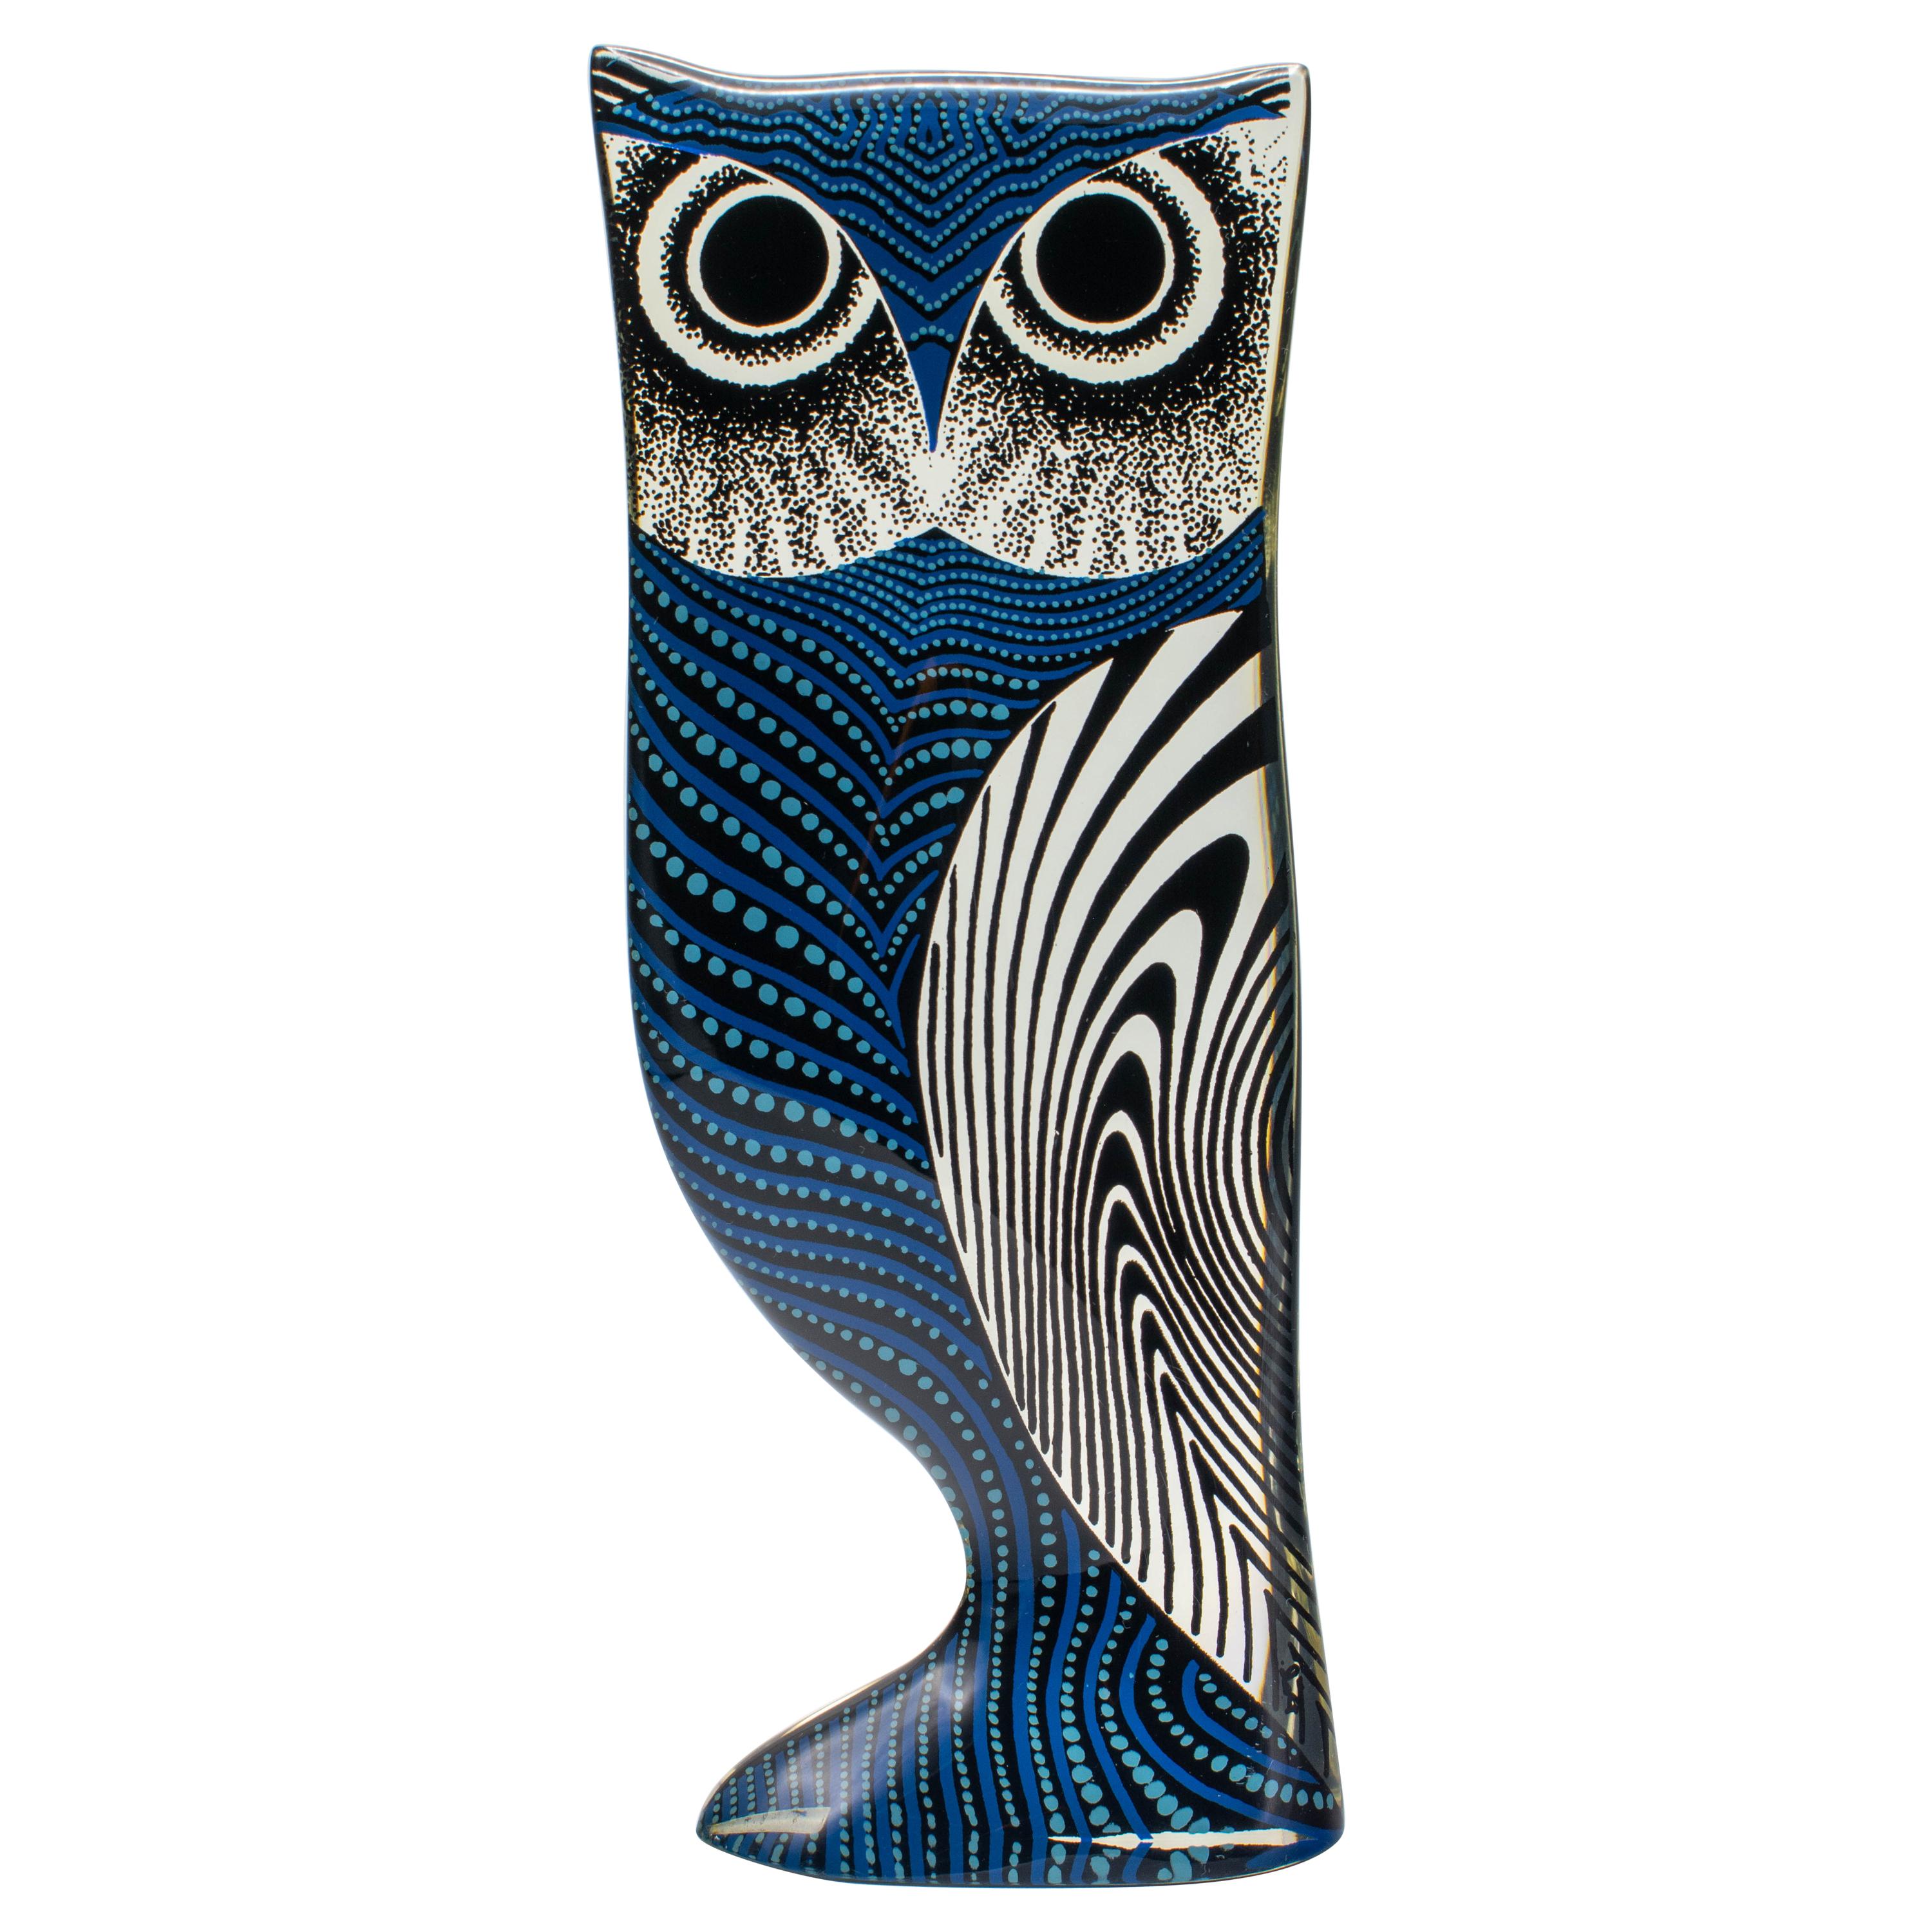 Midcentury Palatnik Op Art Lucite Owl